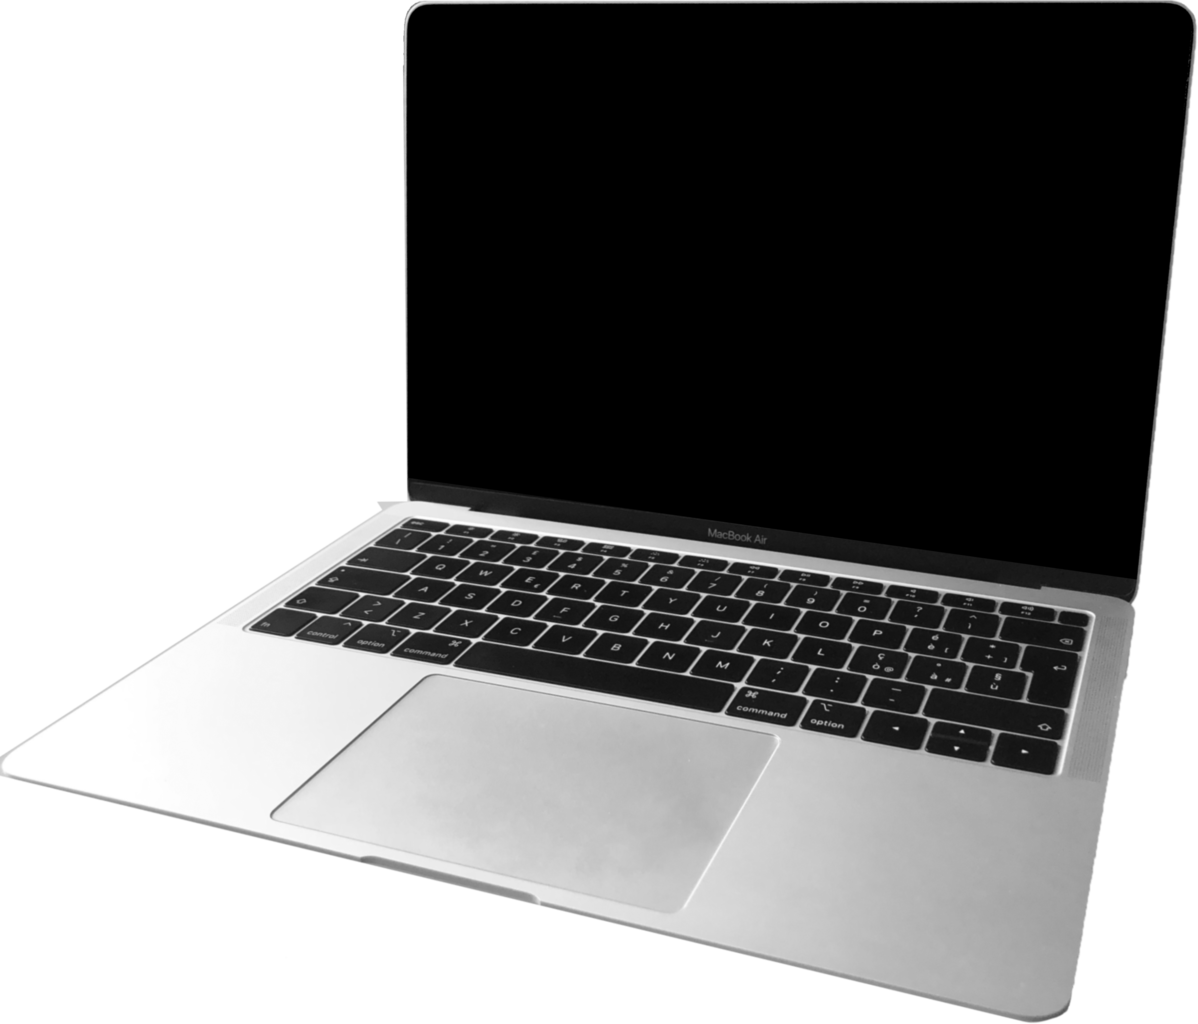 MacBook Air 3rd generation (space gray).png